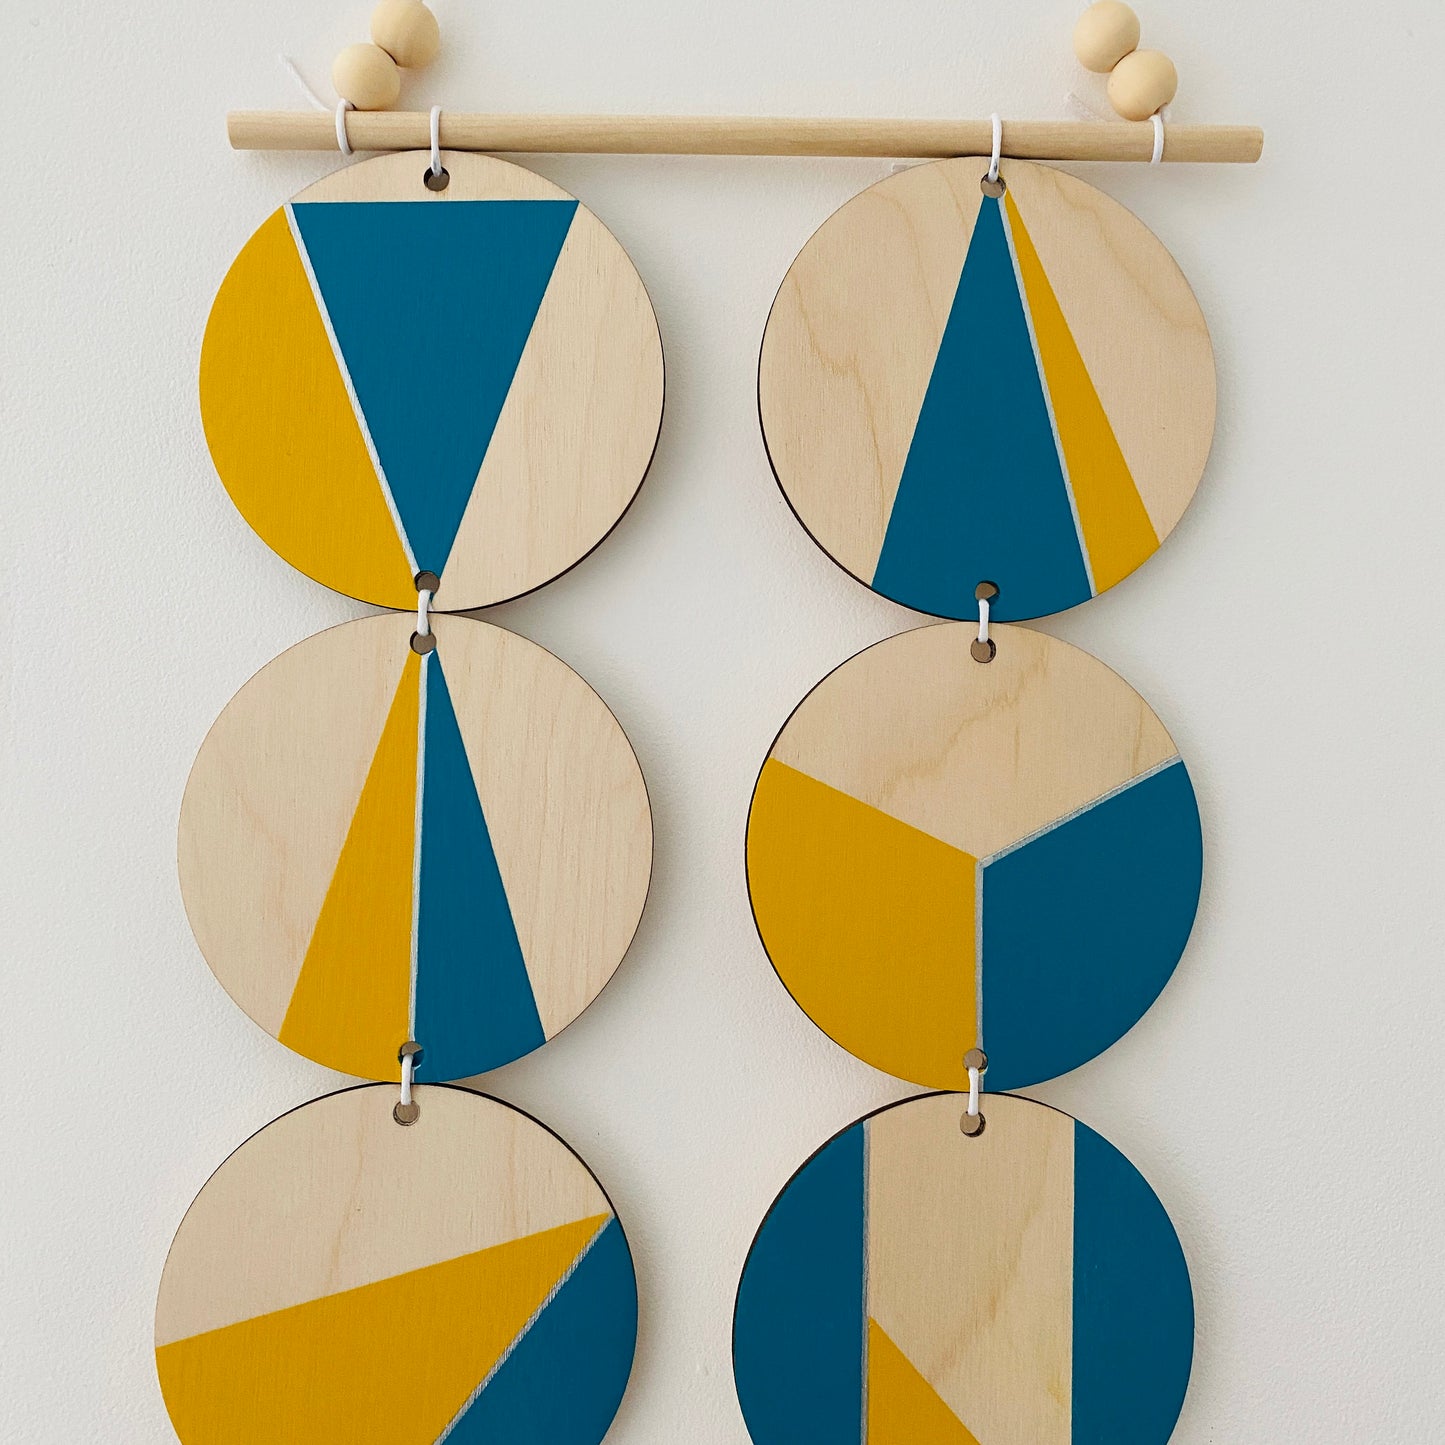 Wall hanging - Colourful Geometric Plywood - Scandi Hygge Boho - Wall Hanging - Wall Art multi - Bright Teal and Yellow Decor